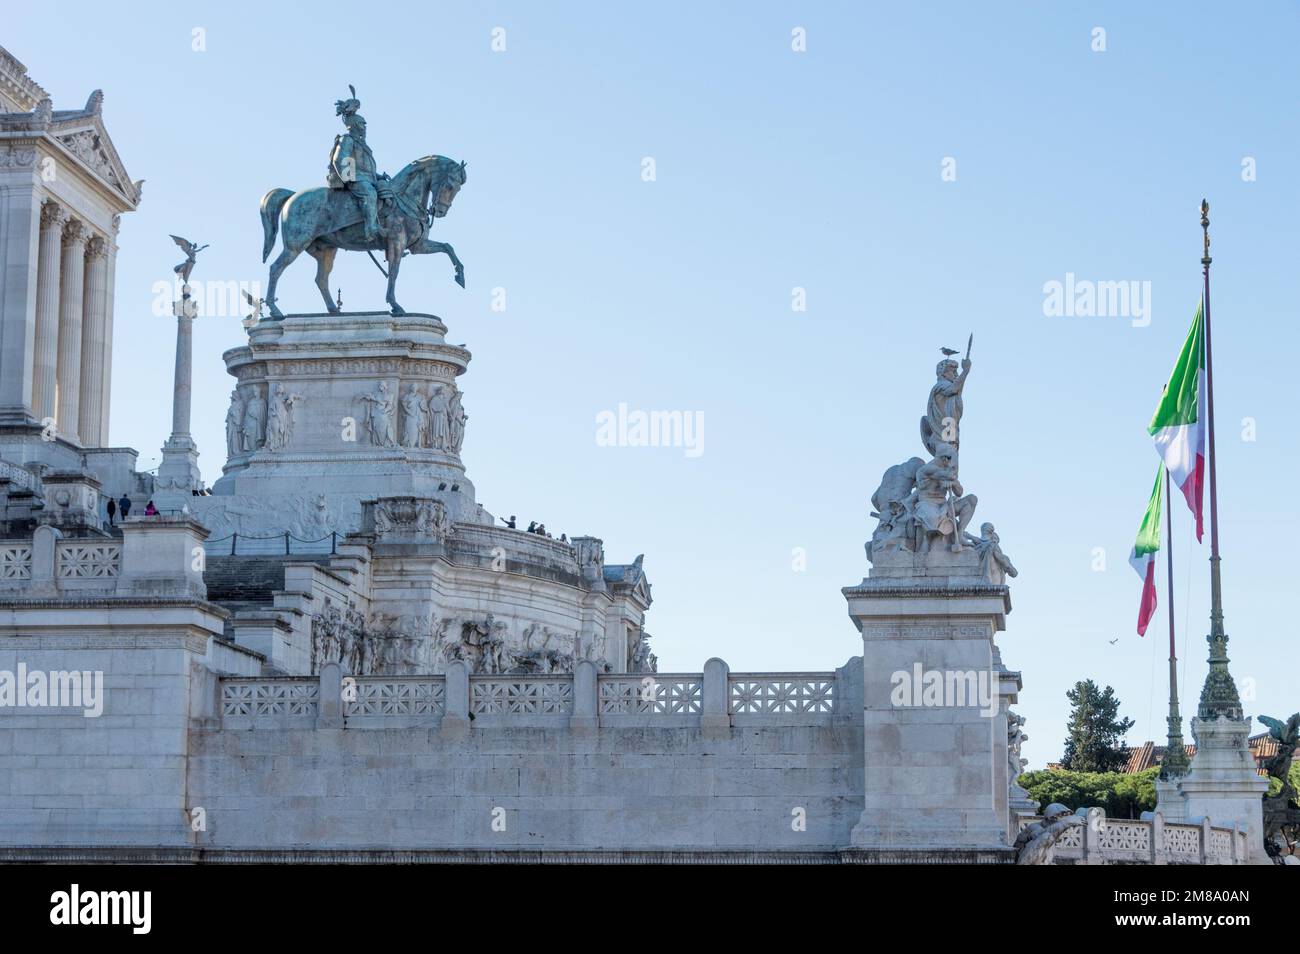 Rome - Vittoriano or Altare della Patria (Altar of the Fatherland) with the equestrian monument of Vittorio Emanuele II (1820-1878), first king of Ita Stock Photo